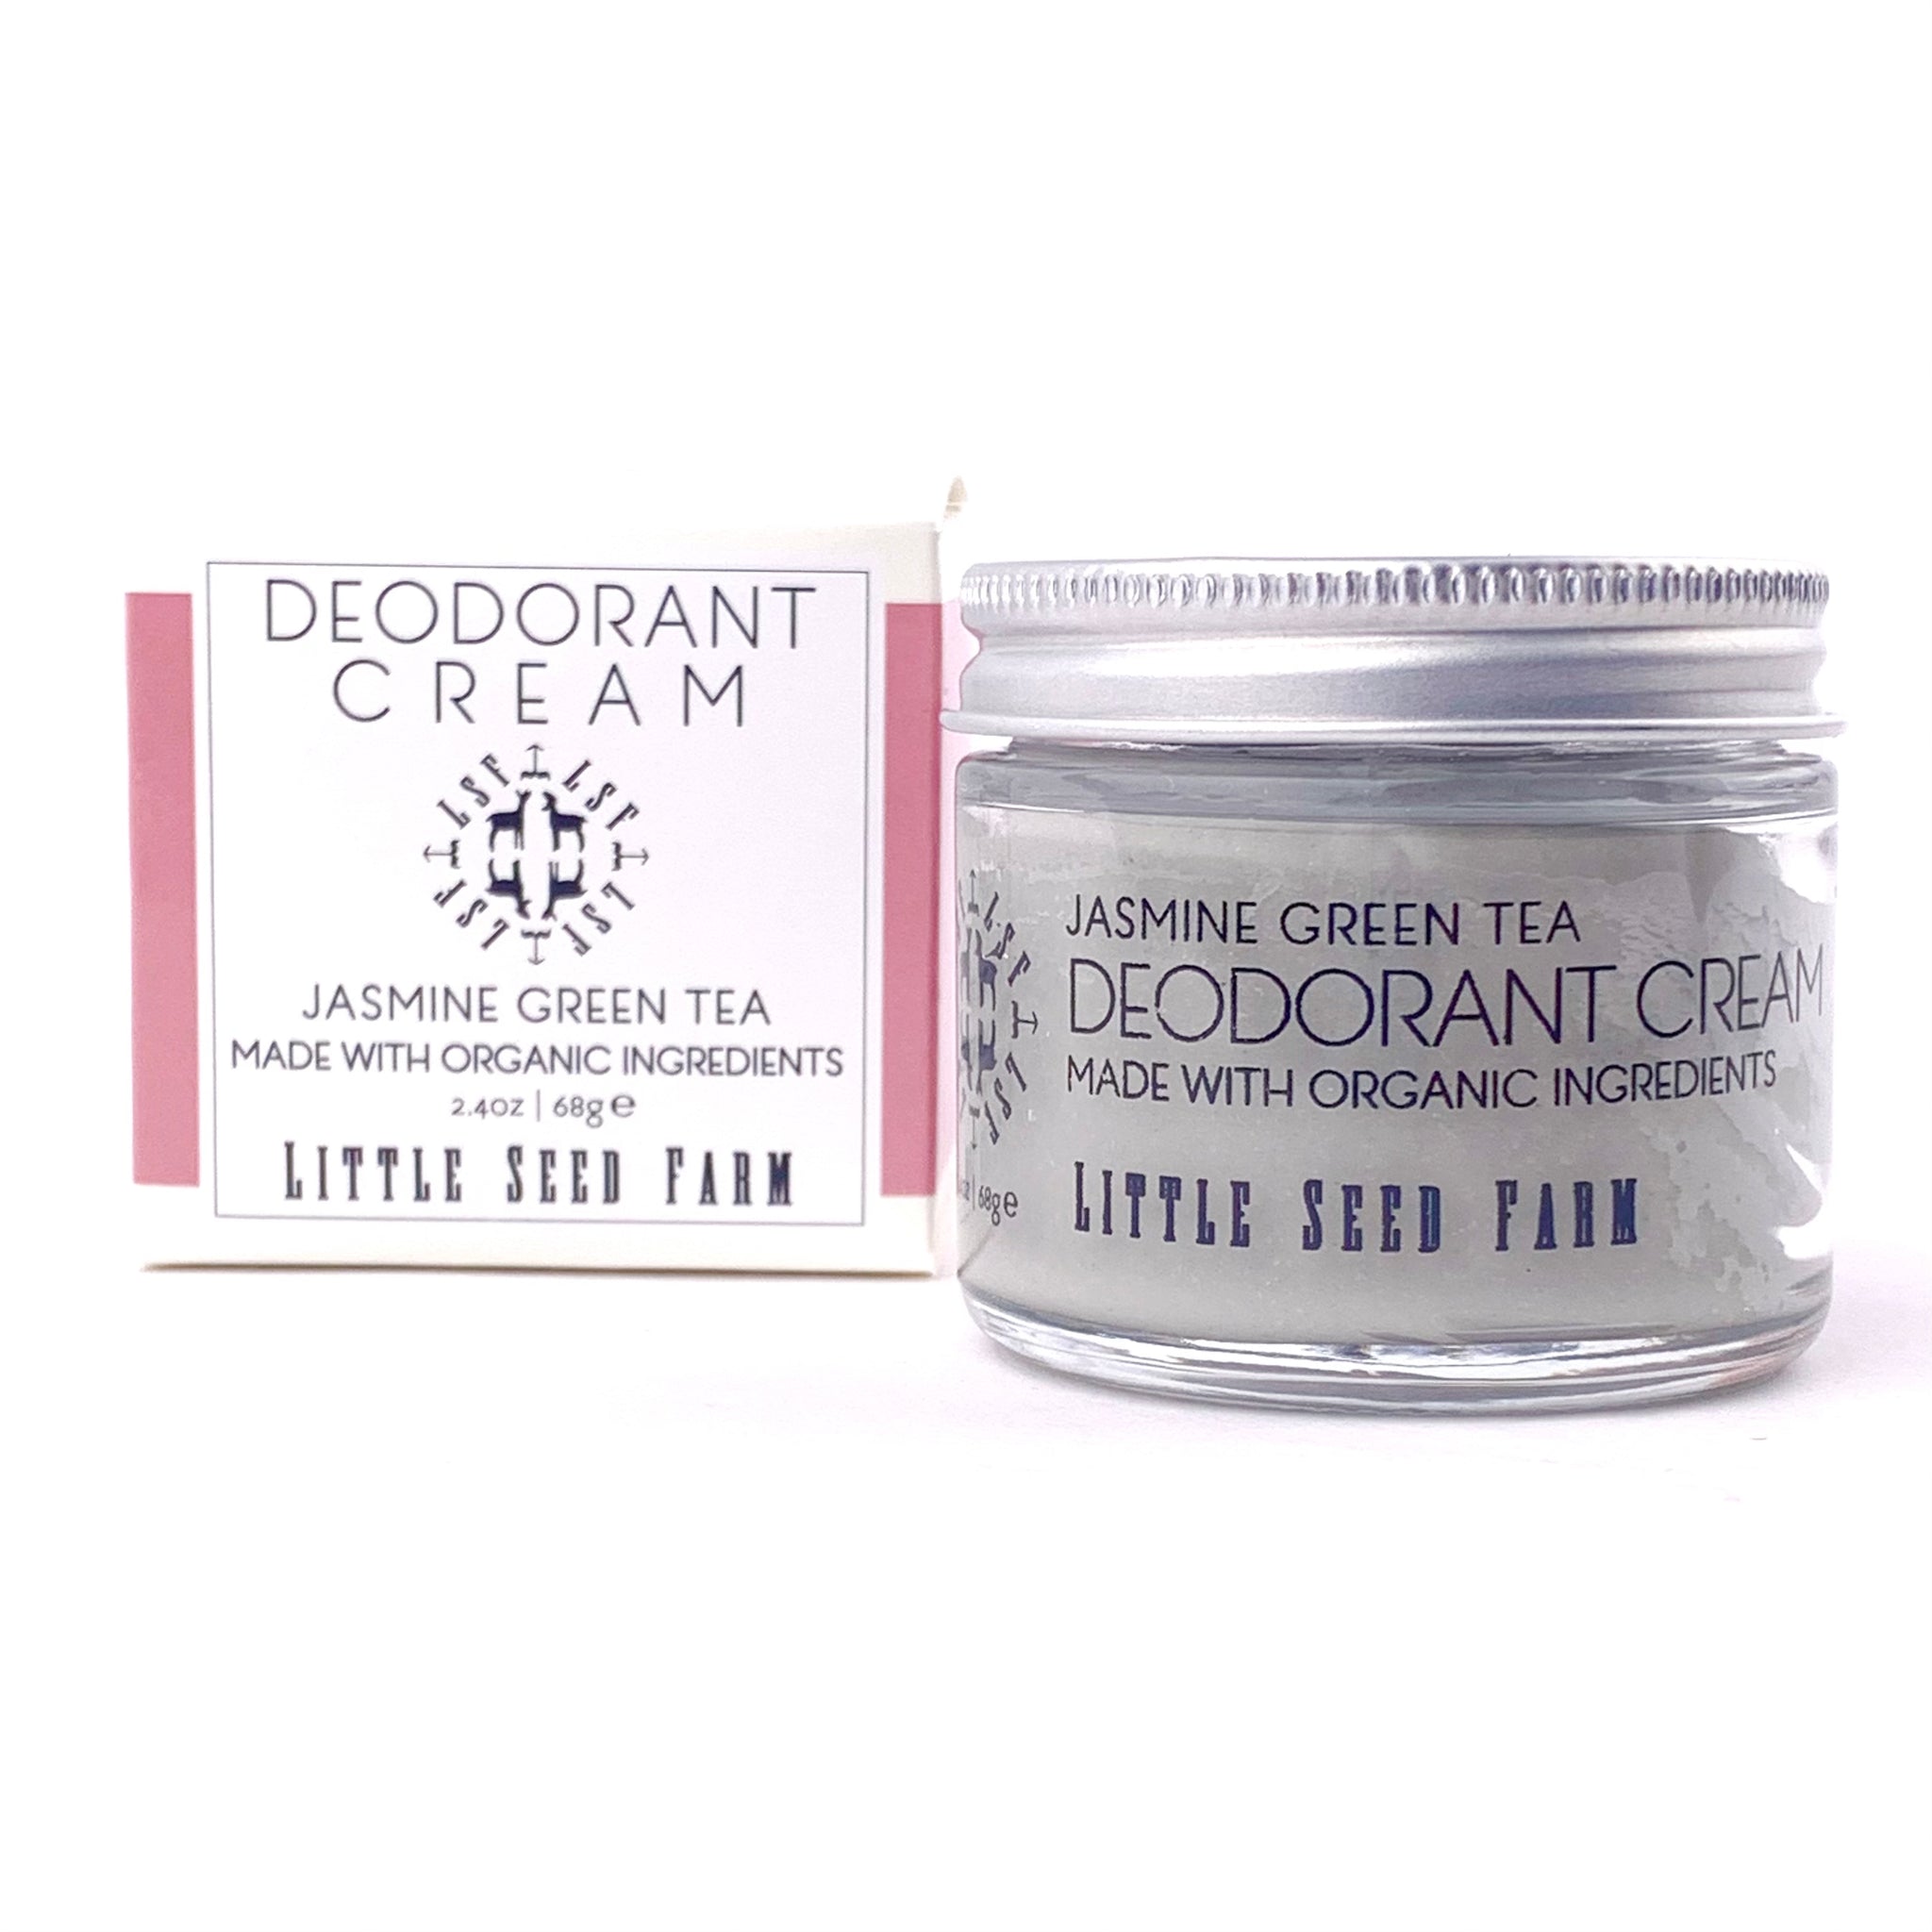 Deodorant Cream - Jasmine Green Tea